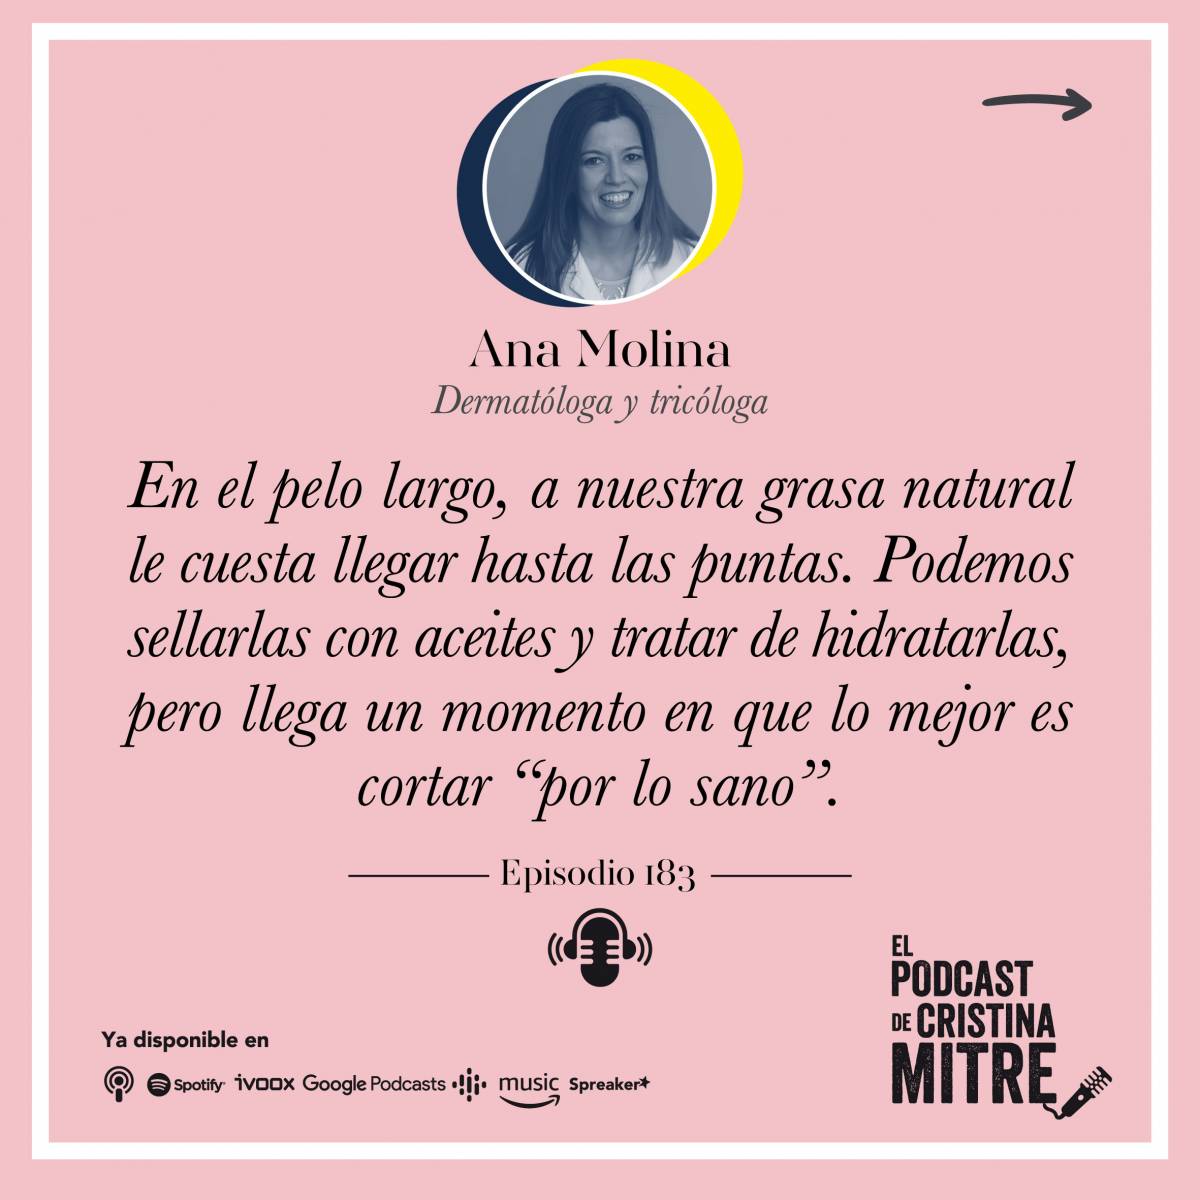 El Podcast de Cristina Mitre Dra. Molina Pelo champú